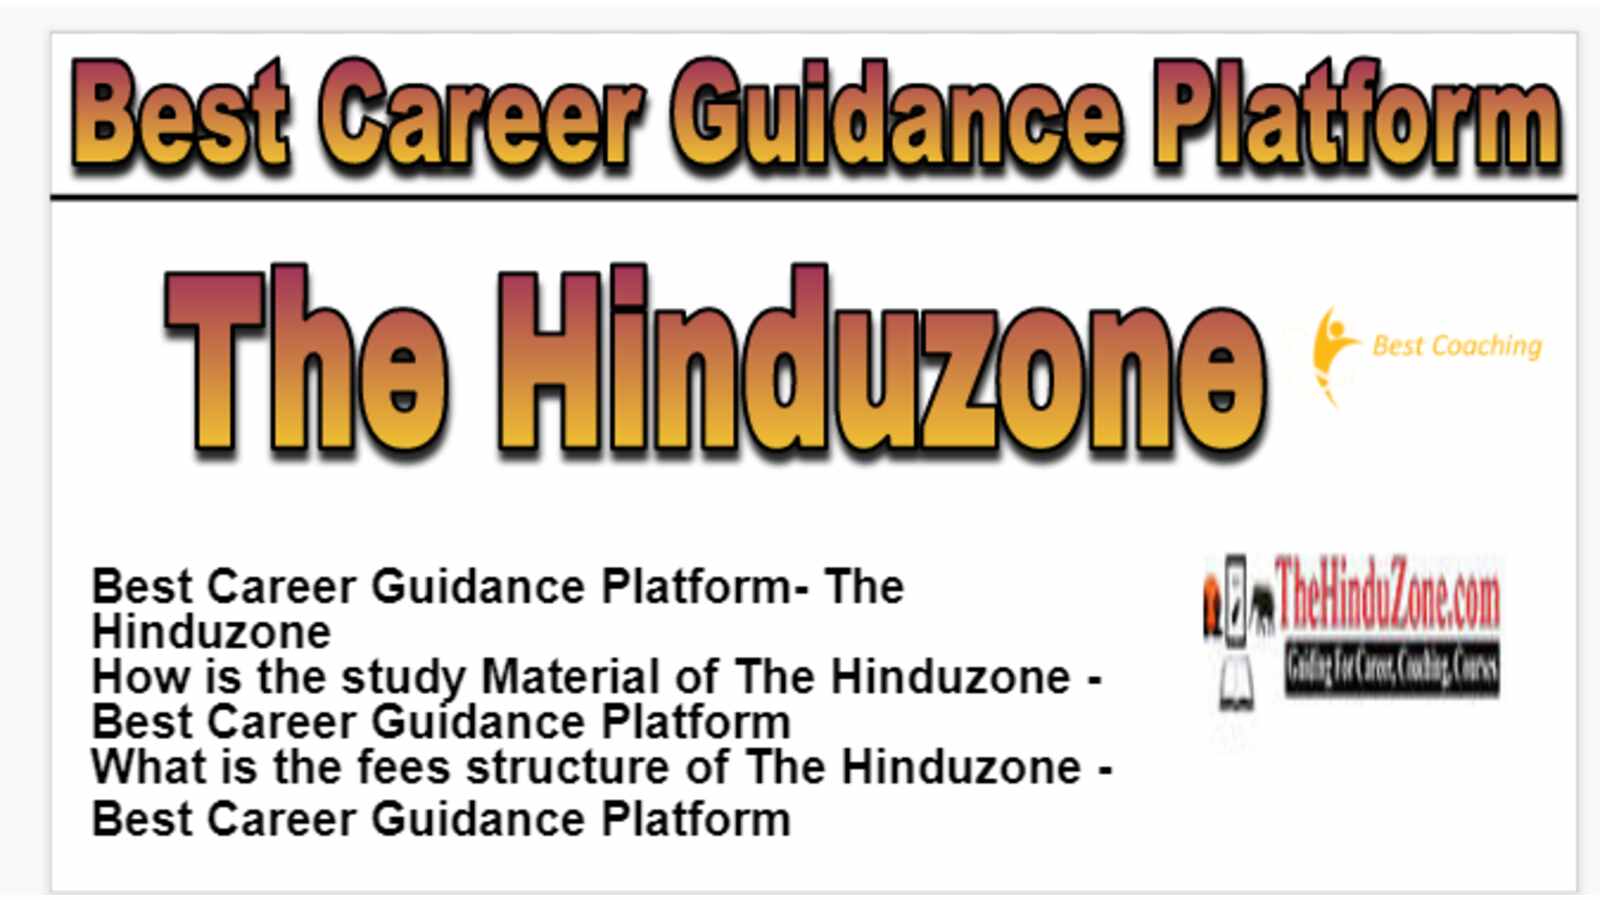 The Hinduzon Best Career Guidance Platform